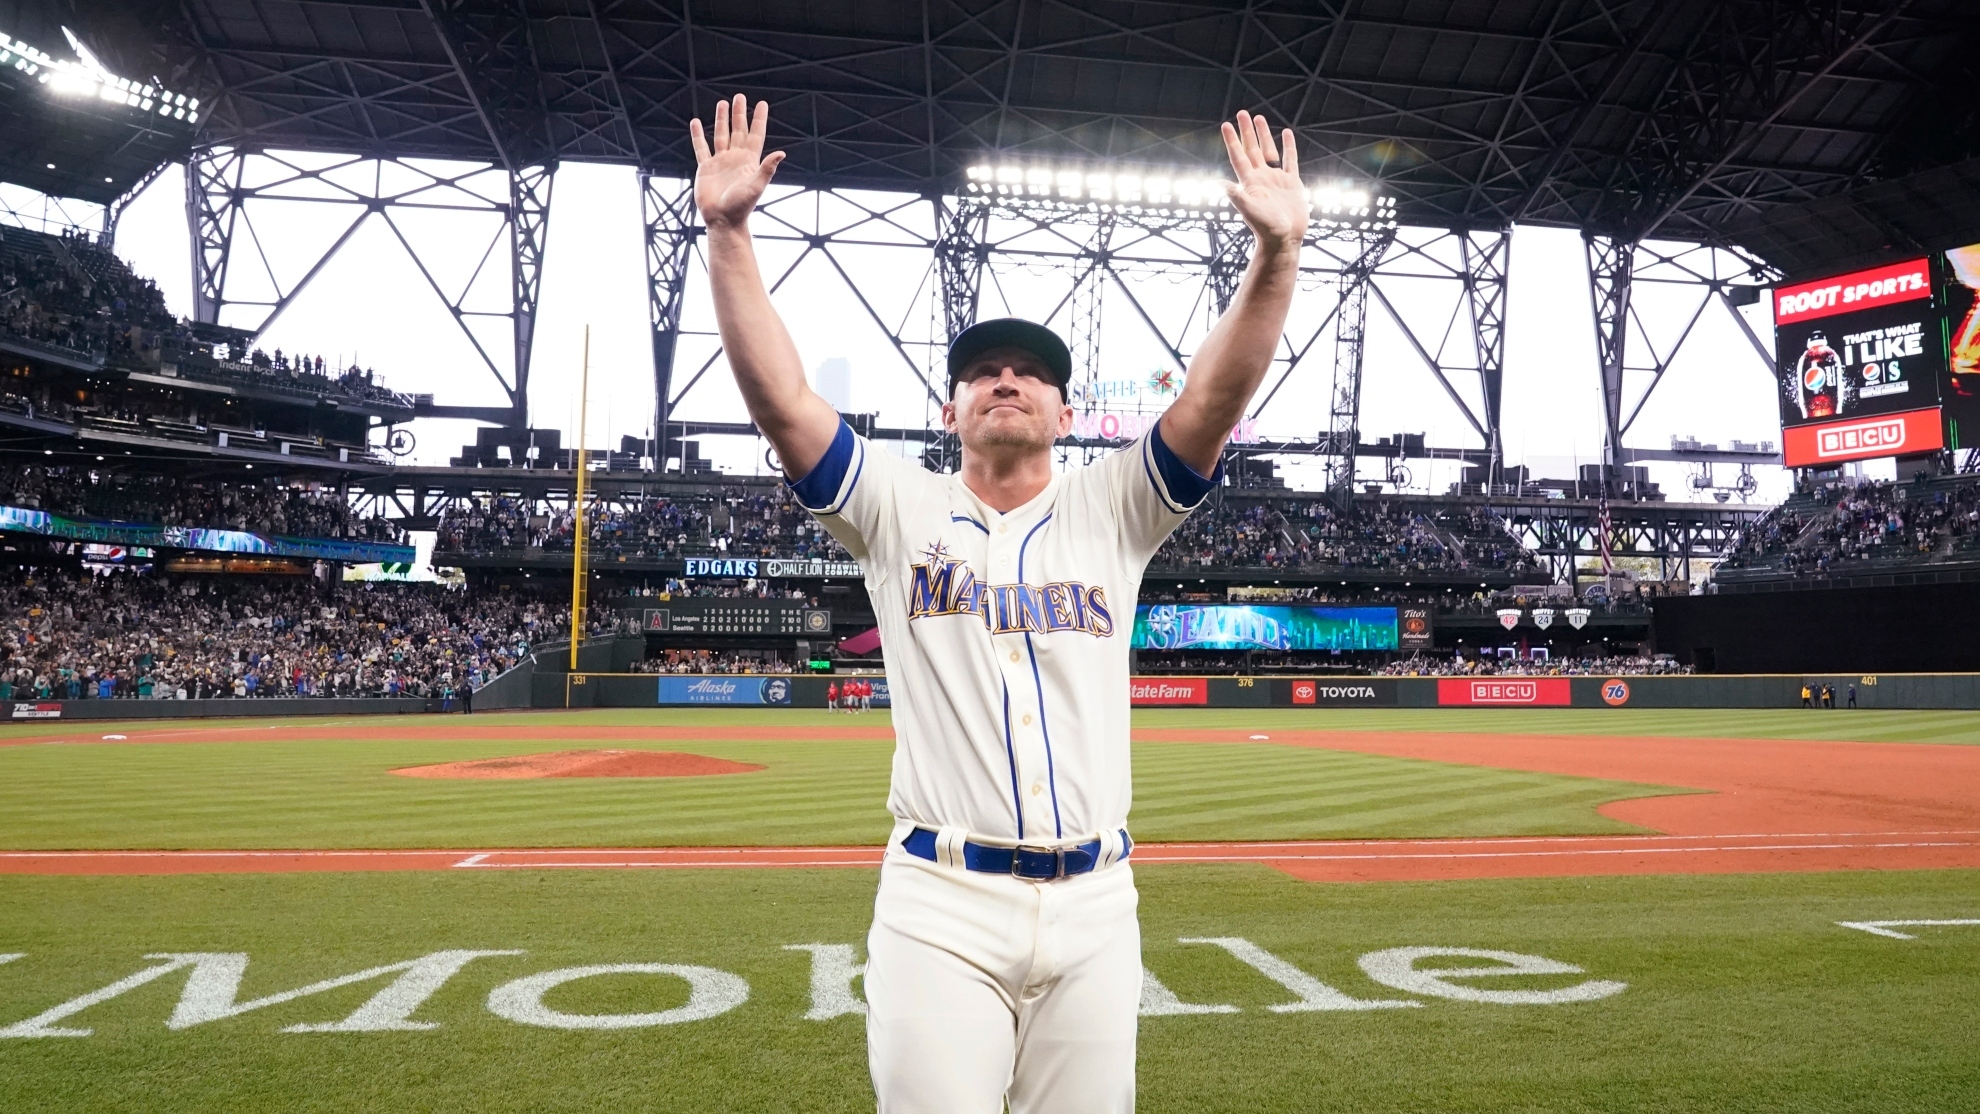 Seattle Mariners third baseman Kyle Seager.